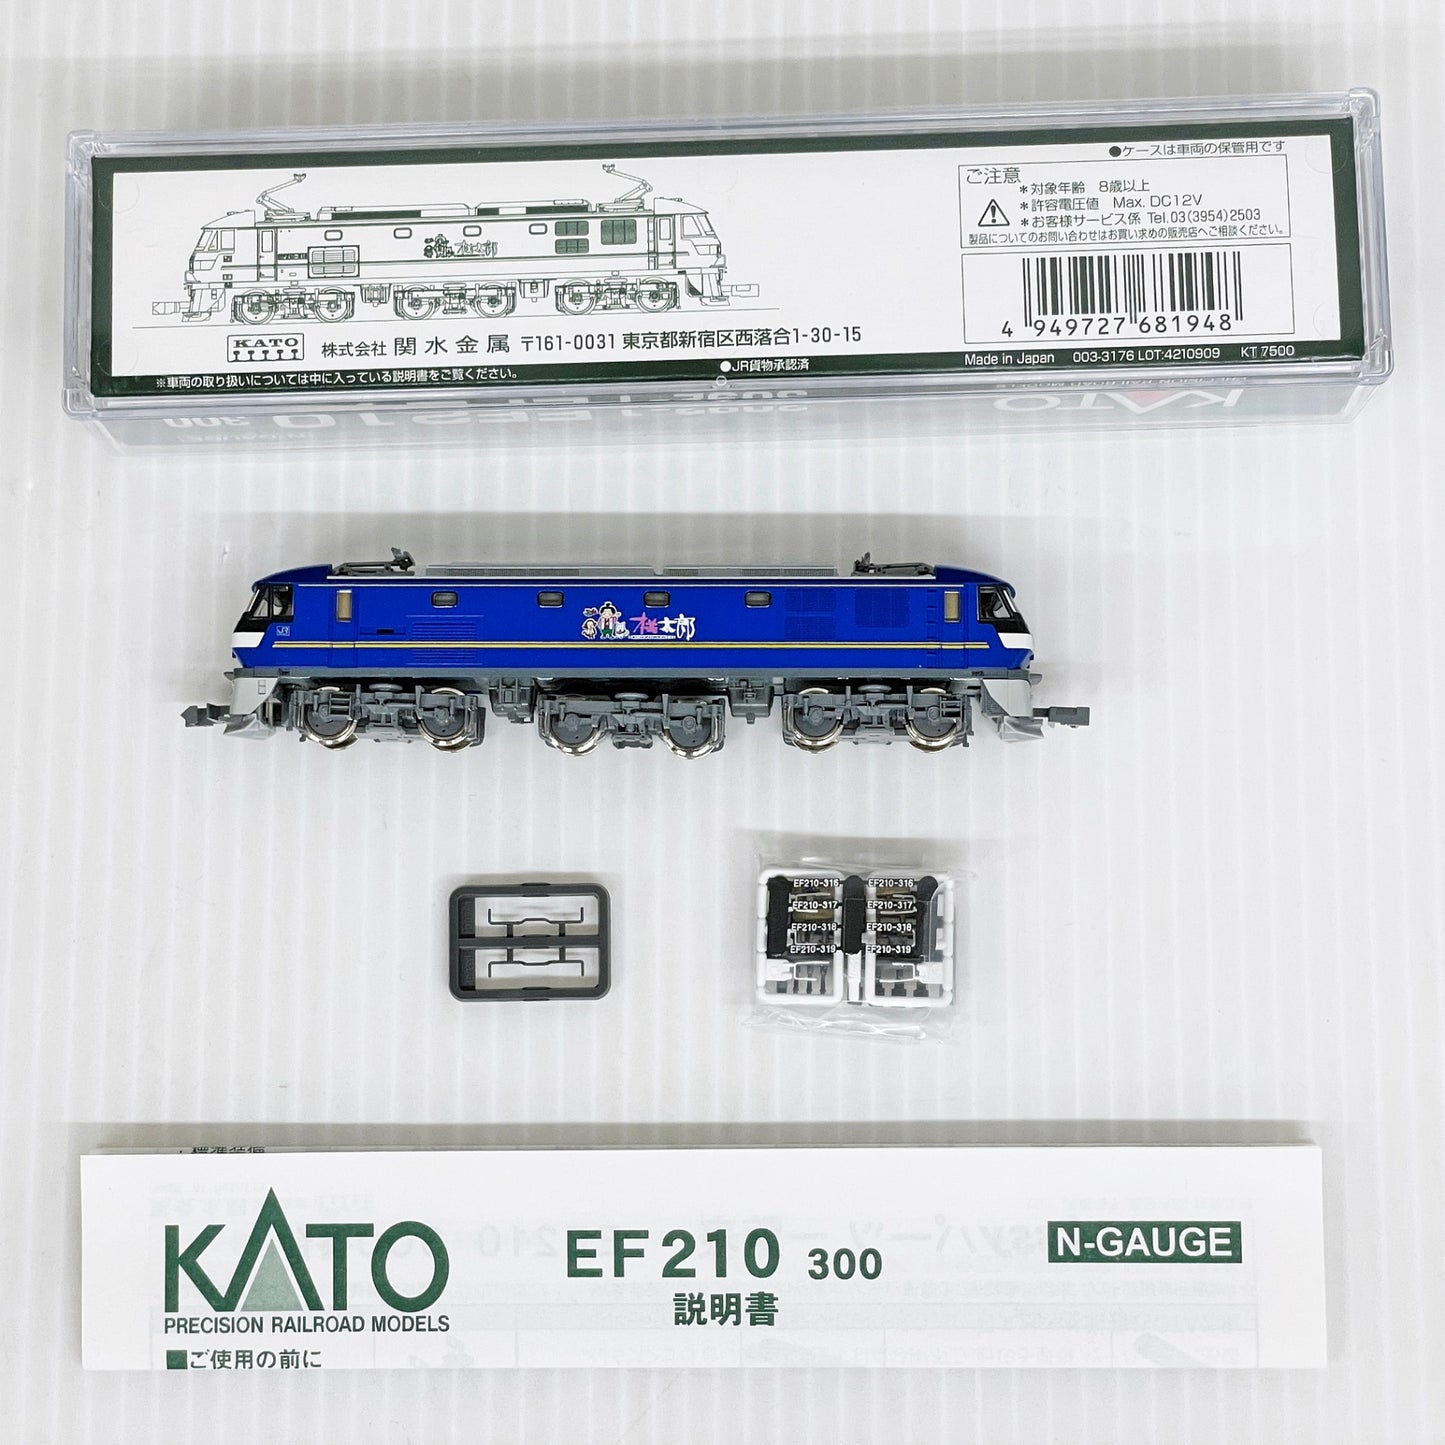 KATO Nゲージ EF210-300 直流電気機関車 品番3092-1 モーター付動力車